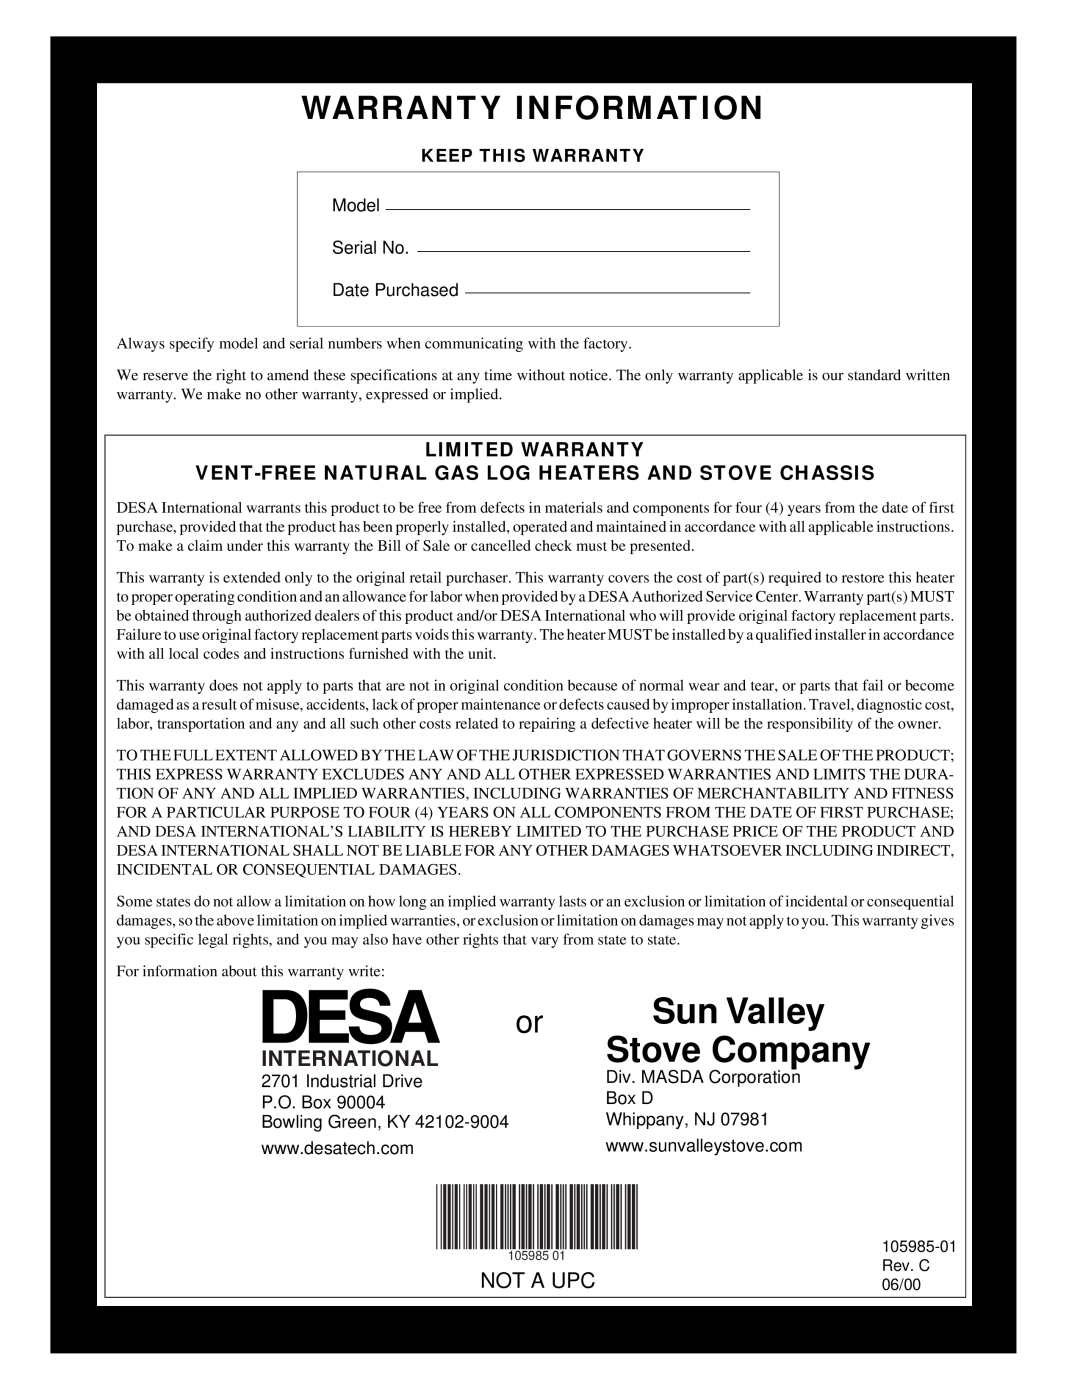 Desa MSVFBNR Series Sun Valley, International, Stove Company, Warranty Information, Not A Upc, Industrial Drive, P.O. Box 